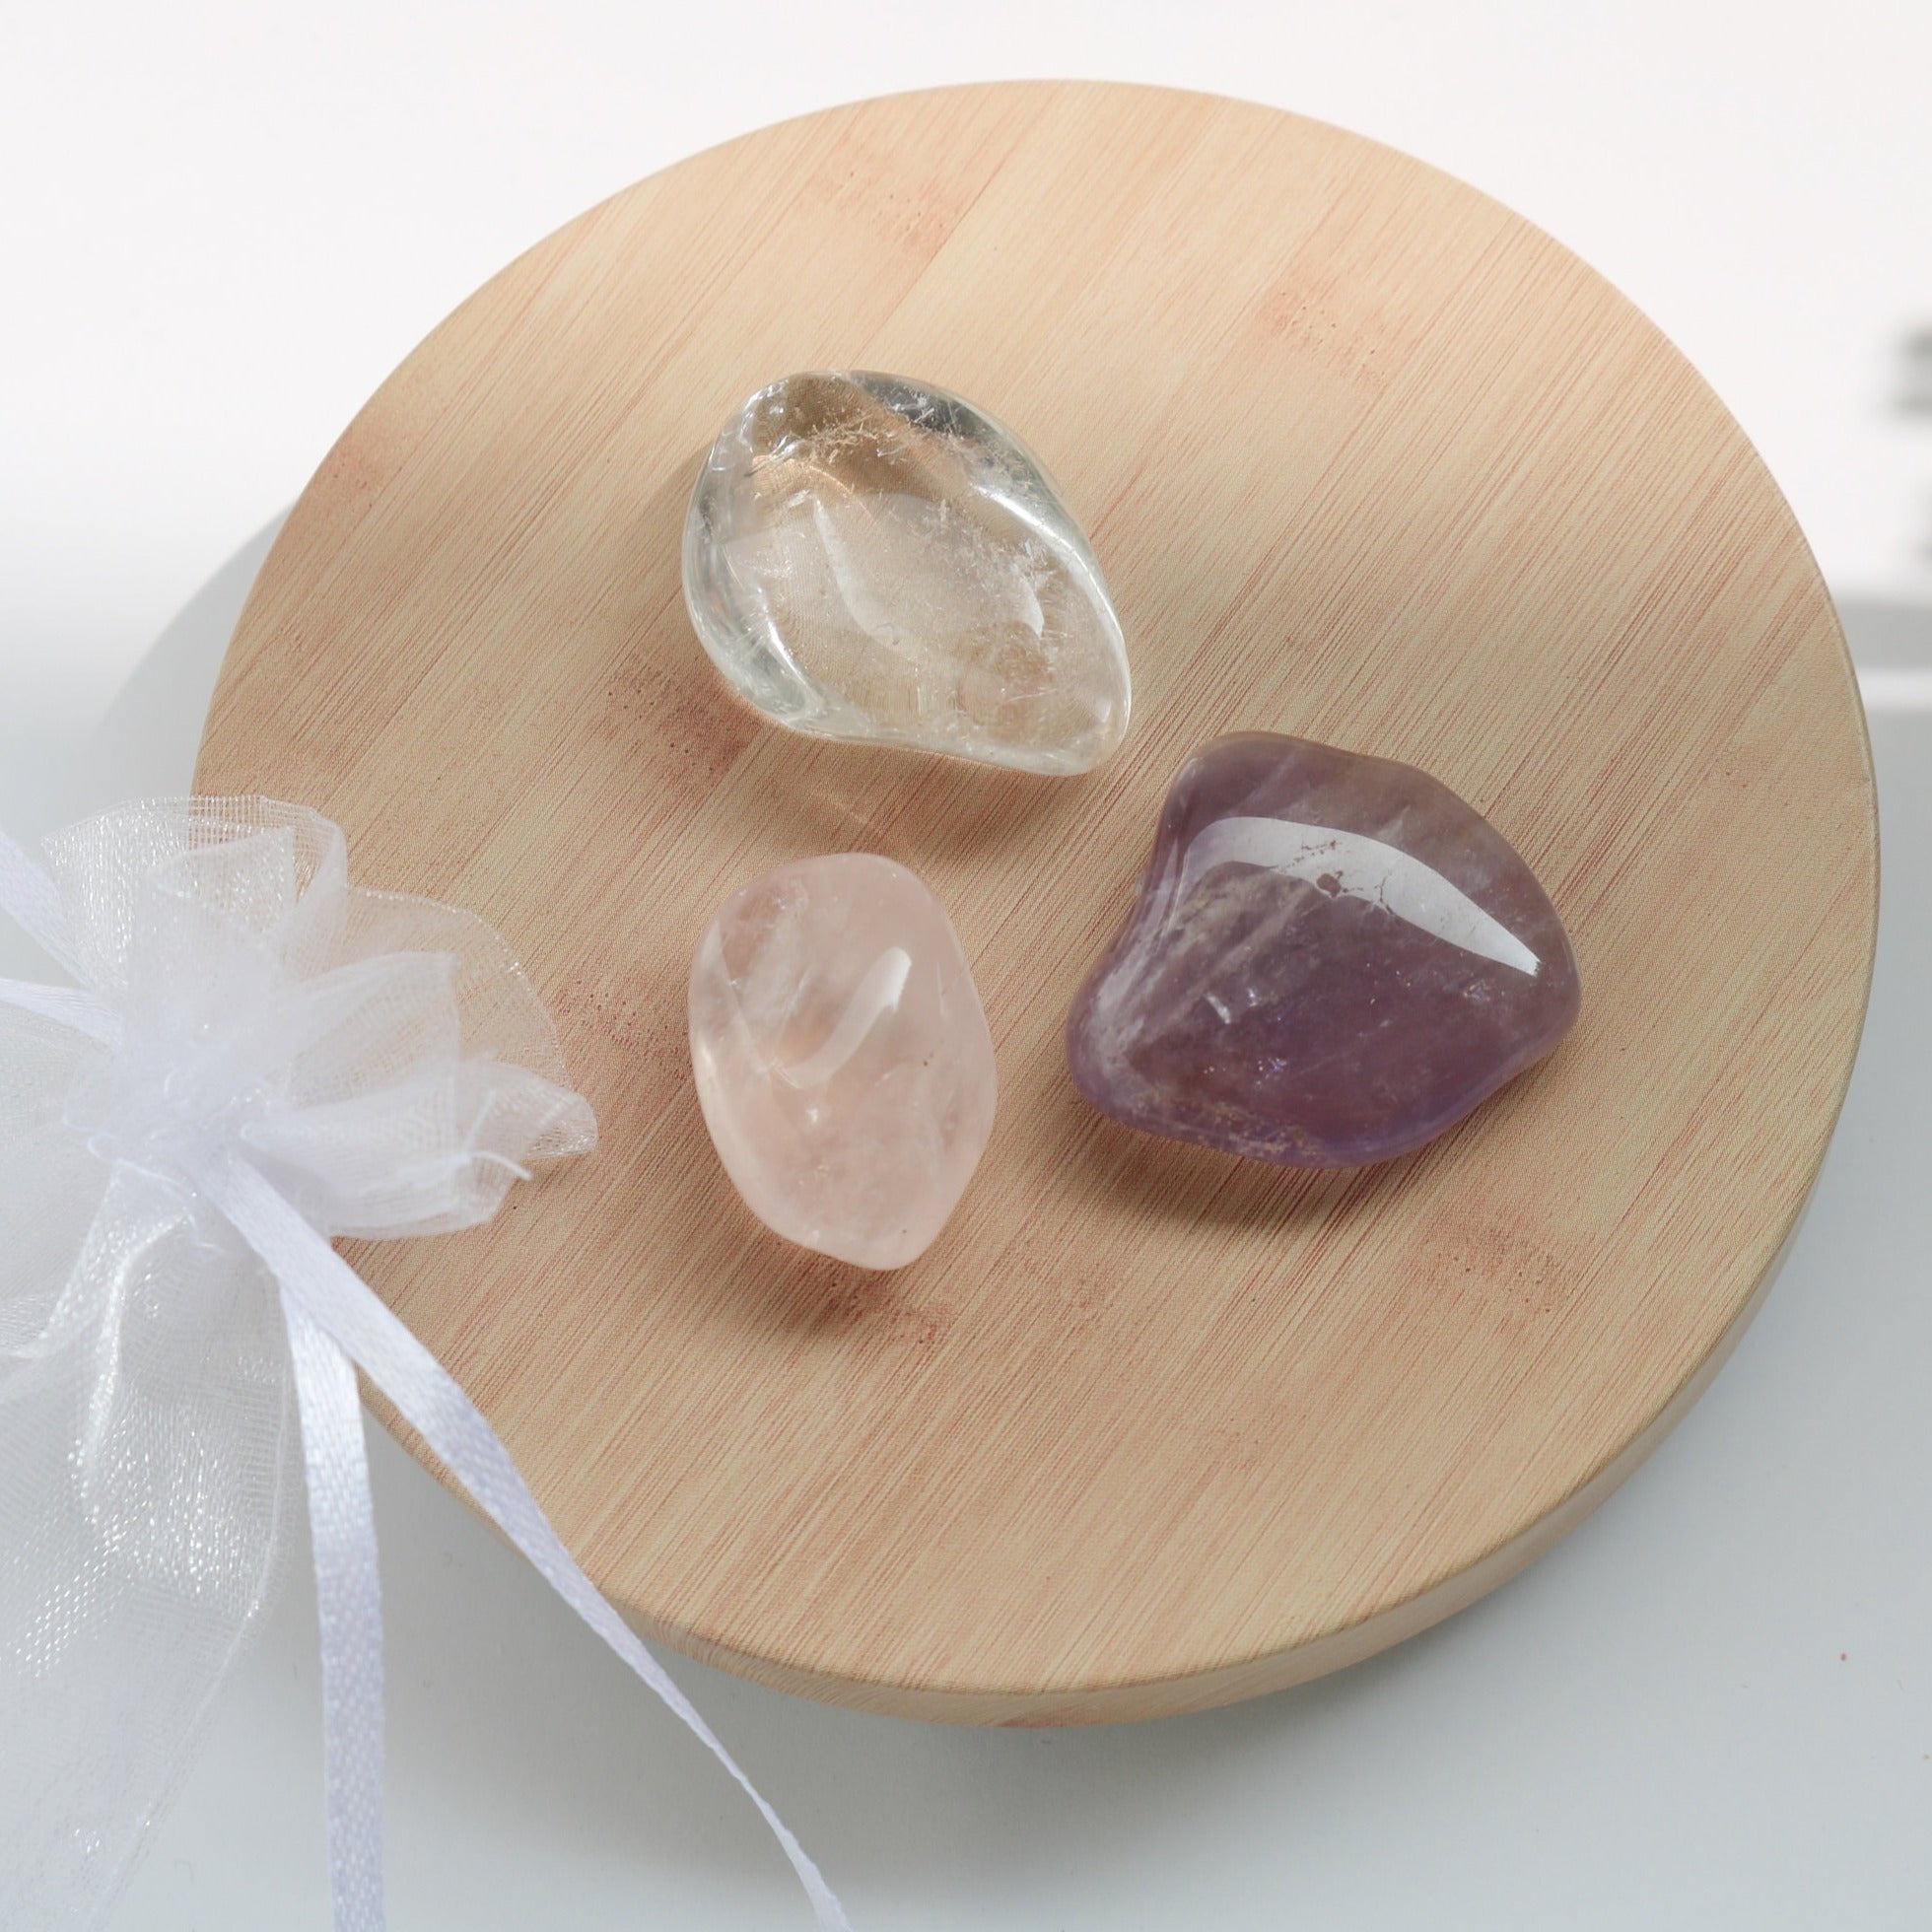 manifestation kit for love rose quartz amethyst clear quartz